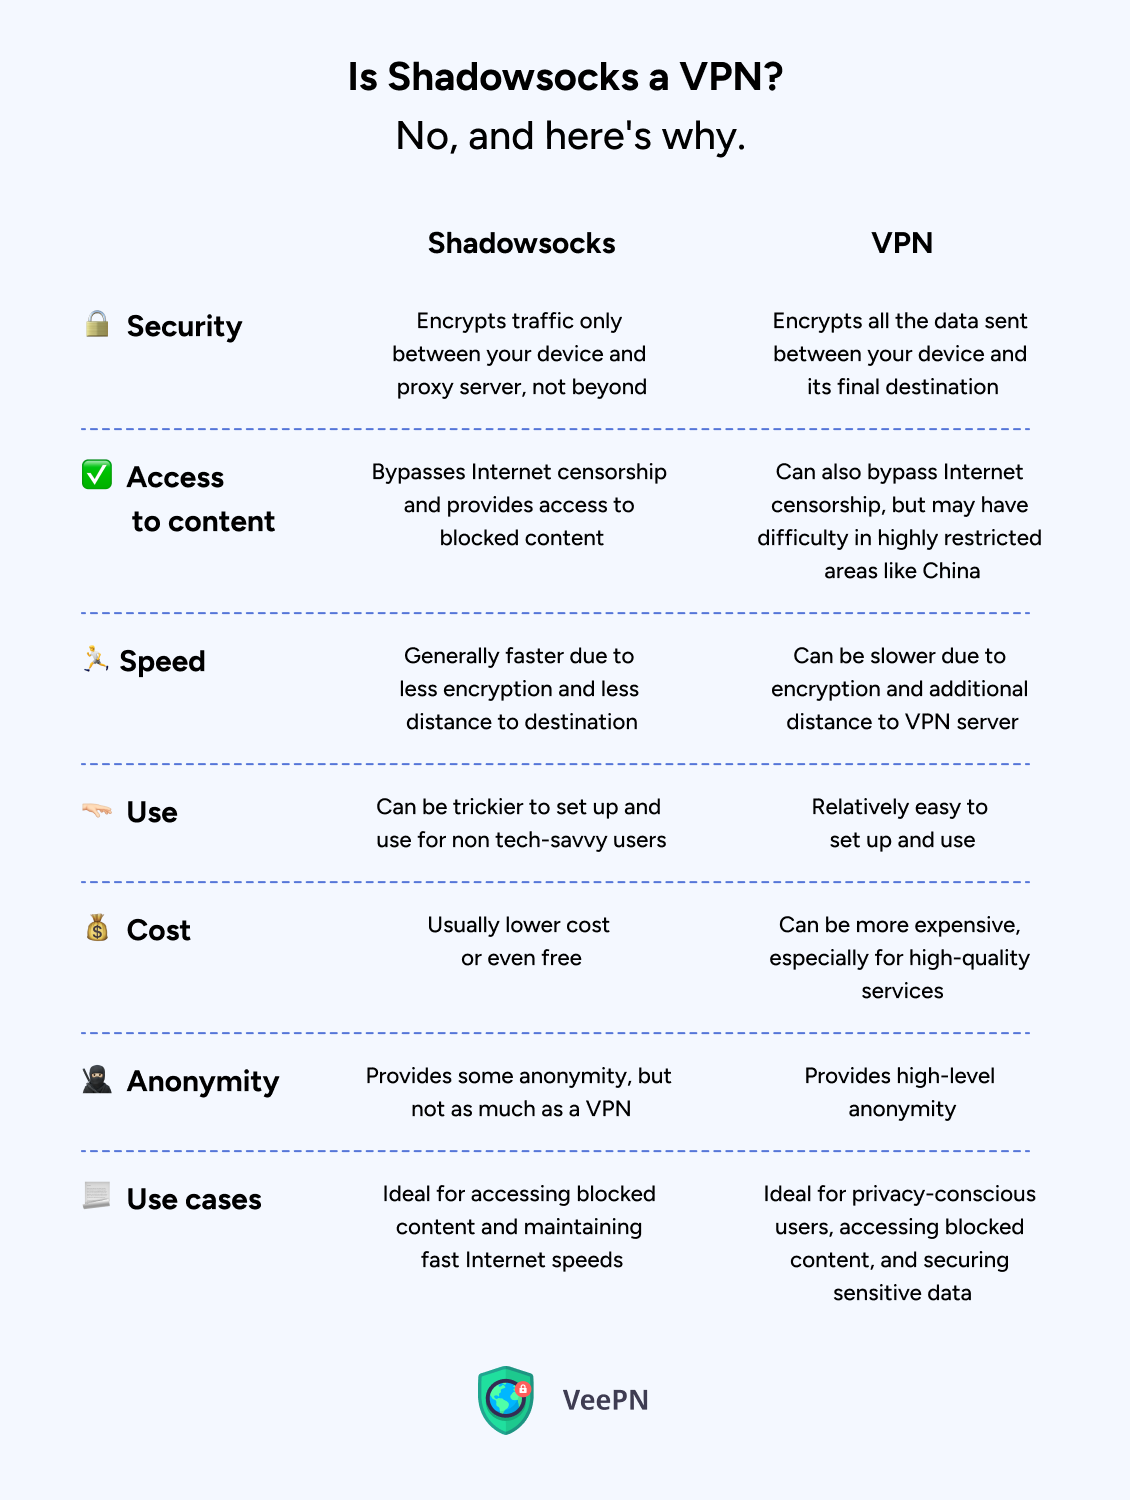 Is Shadowsocks a good VPN?